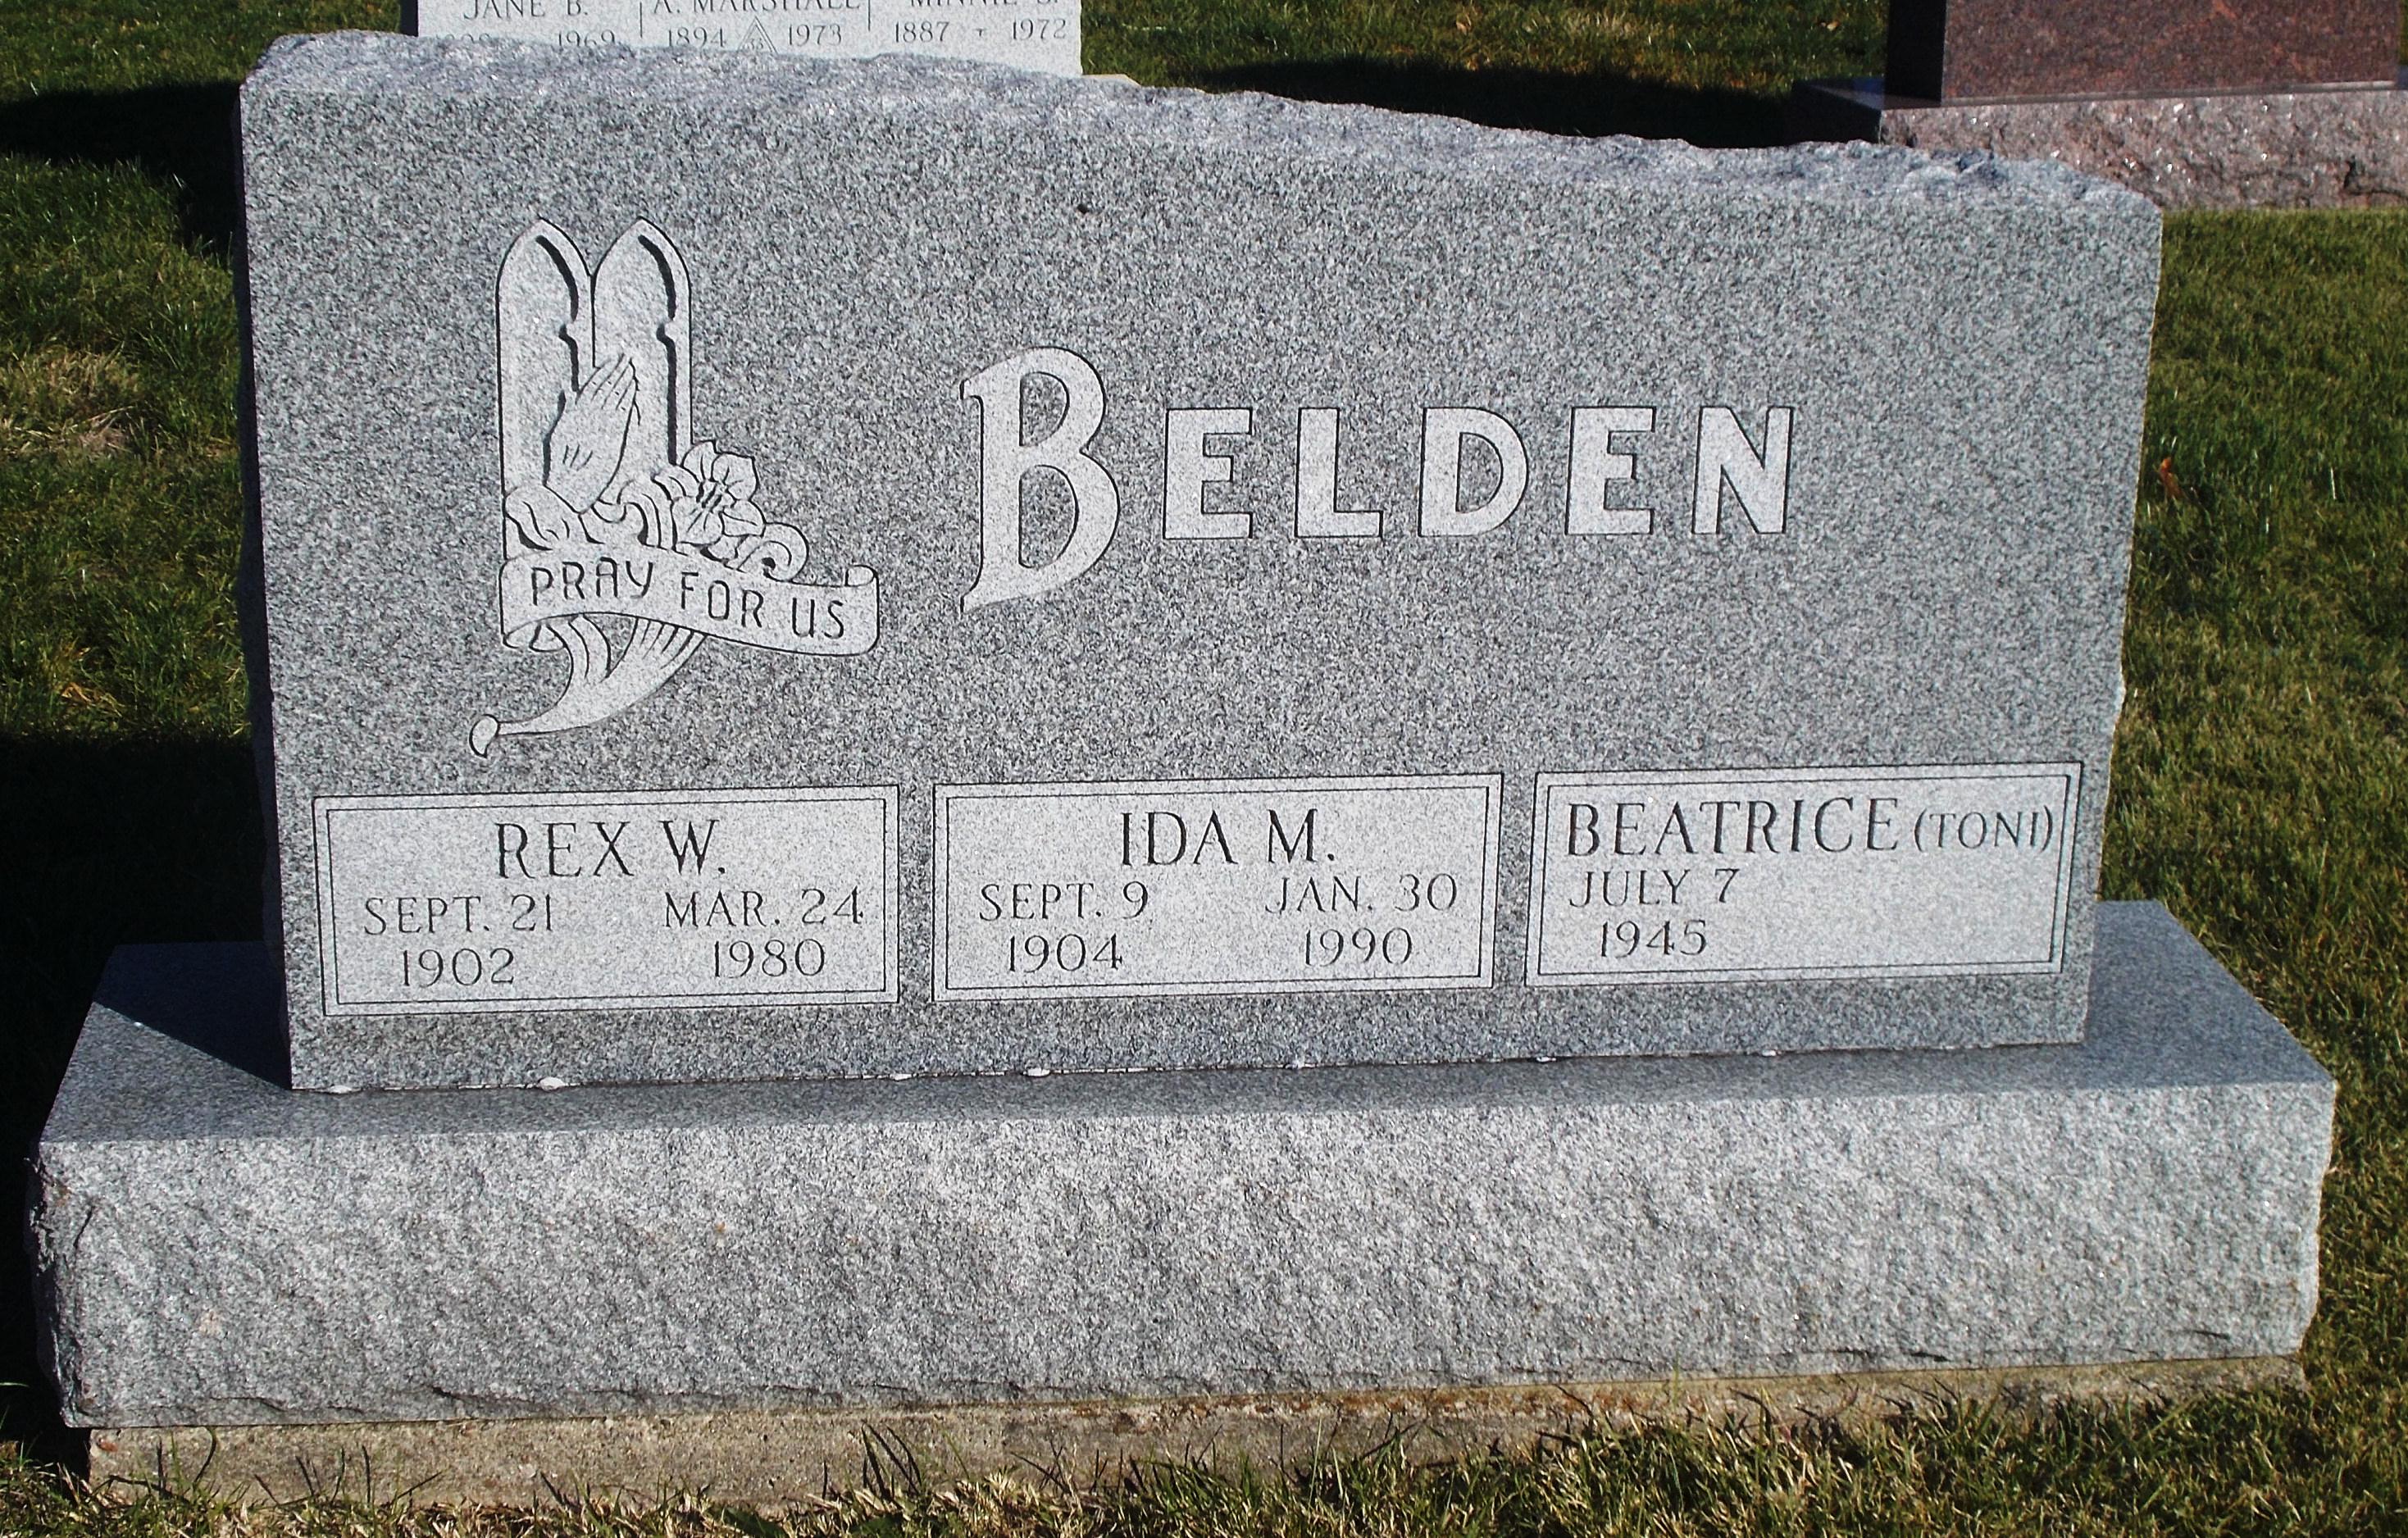 Rex W Belden